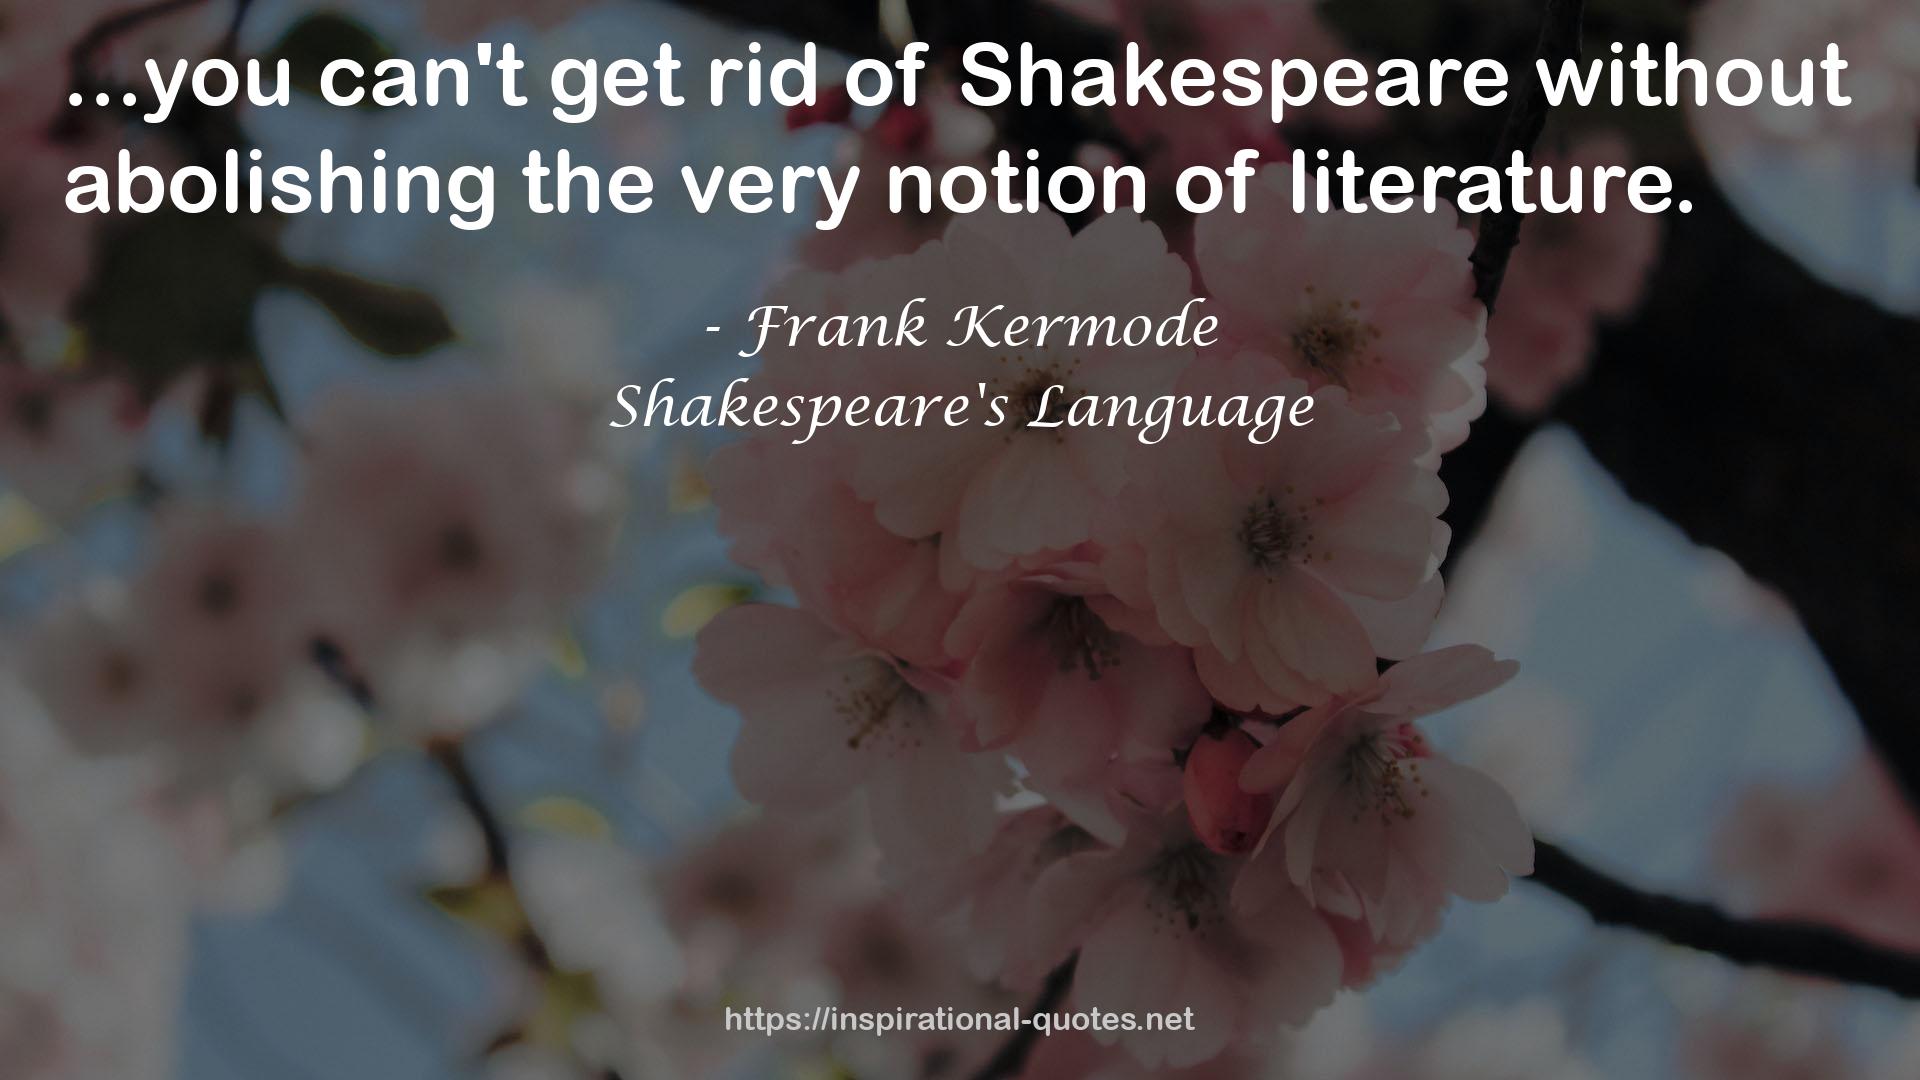 Shakespeare's Language QUOTES